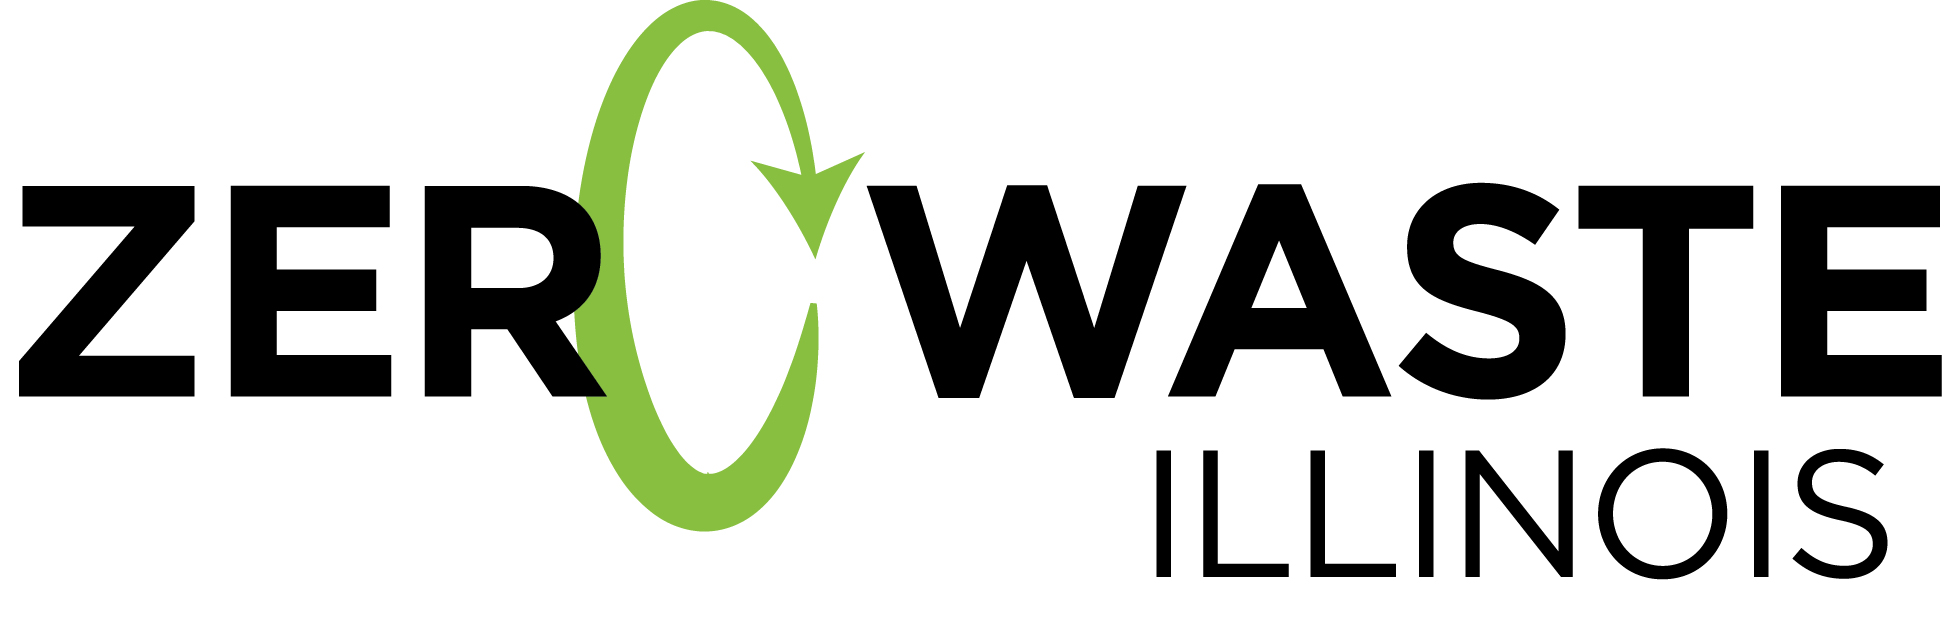 Zero Waste Illinois wordmark